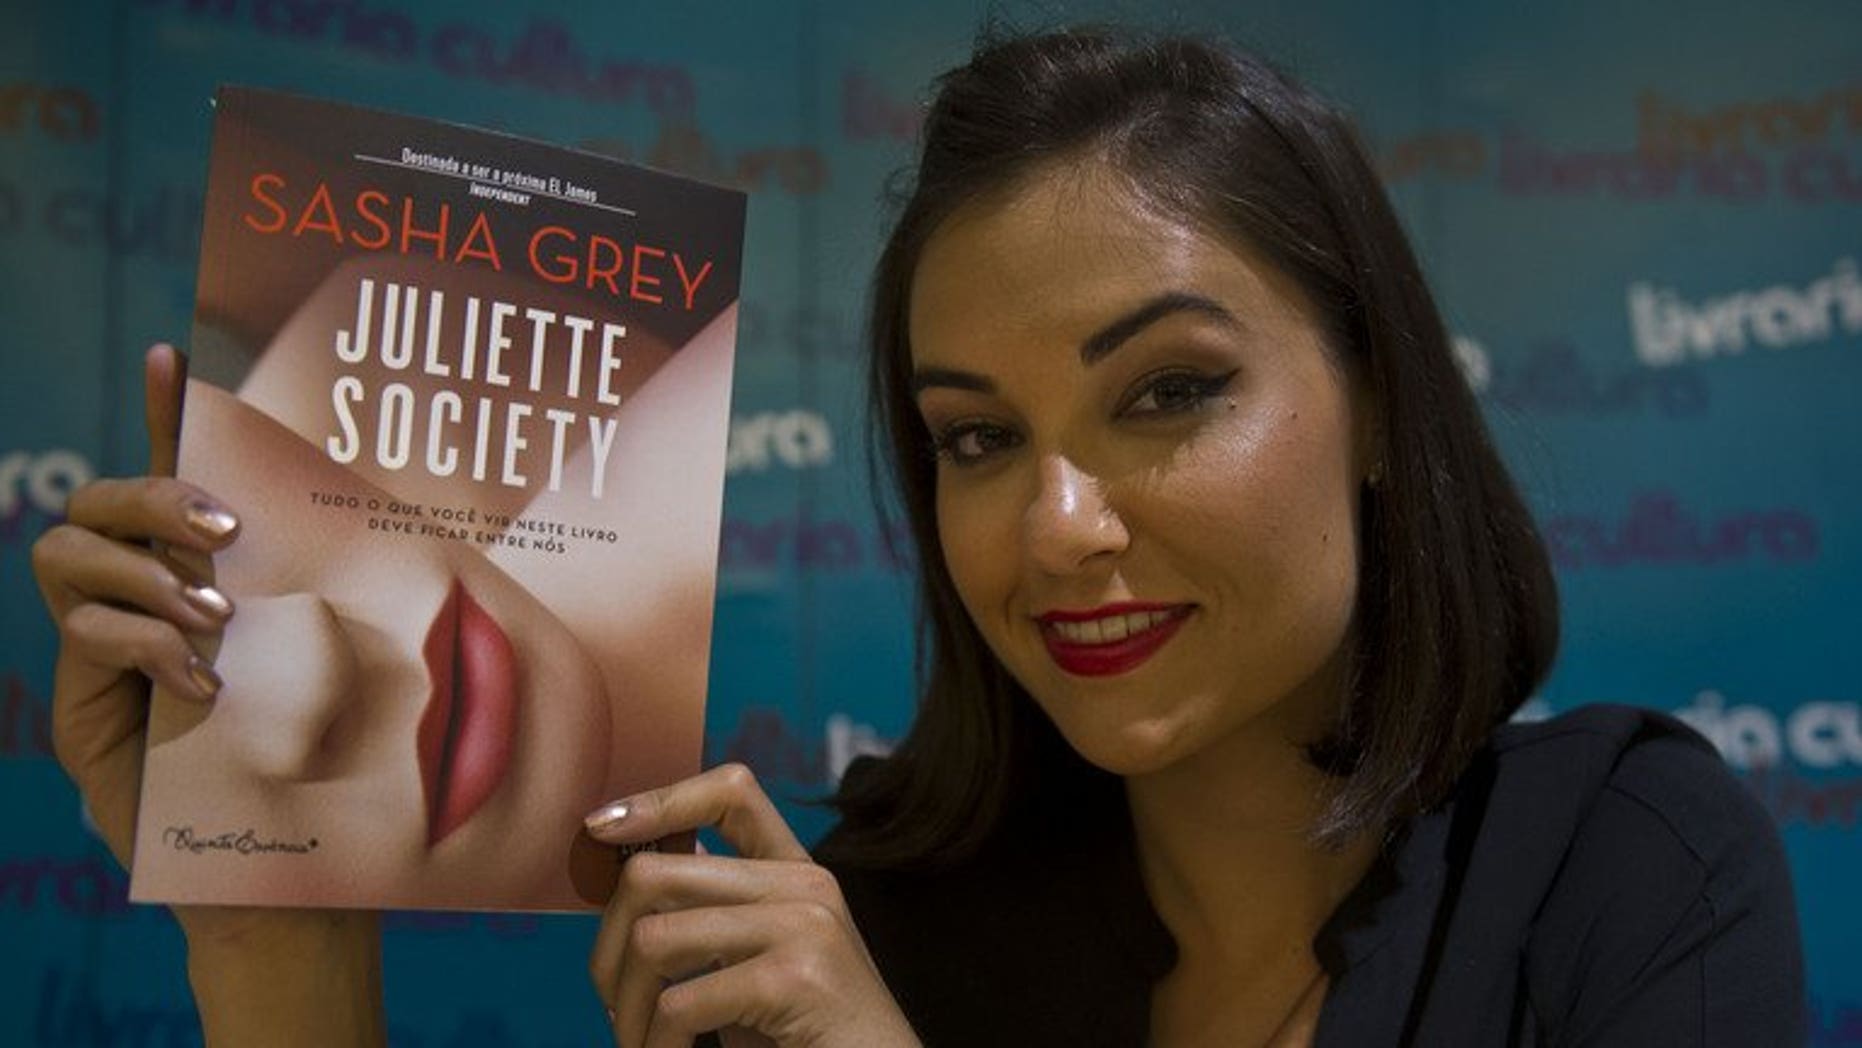 Porn Stars From Brazil - US ex-porn star in Brazil to promote new erotic book | Fox News